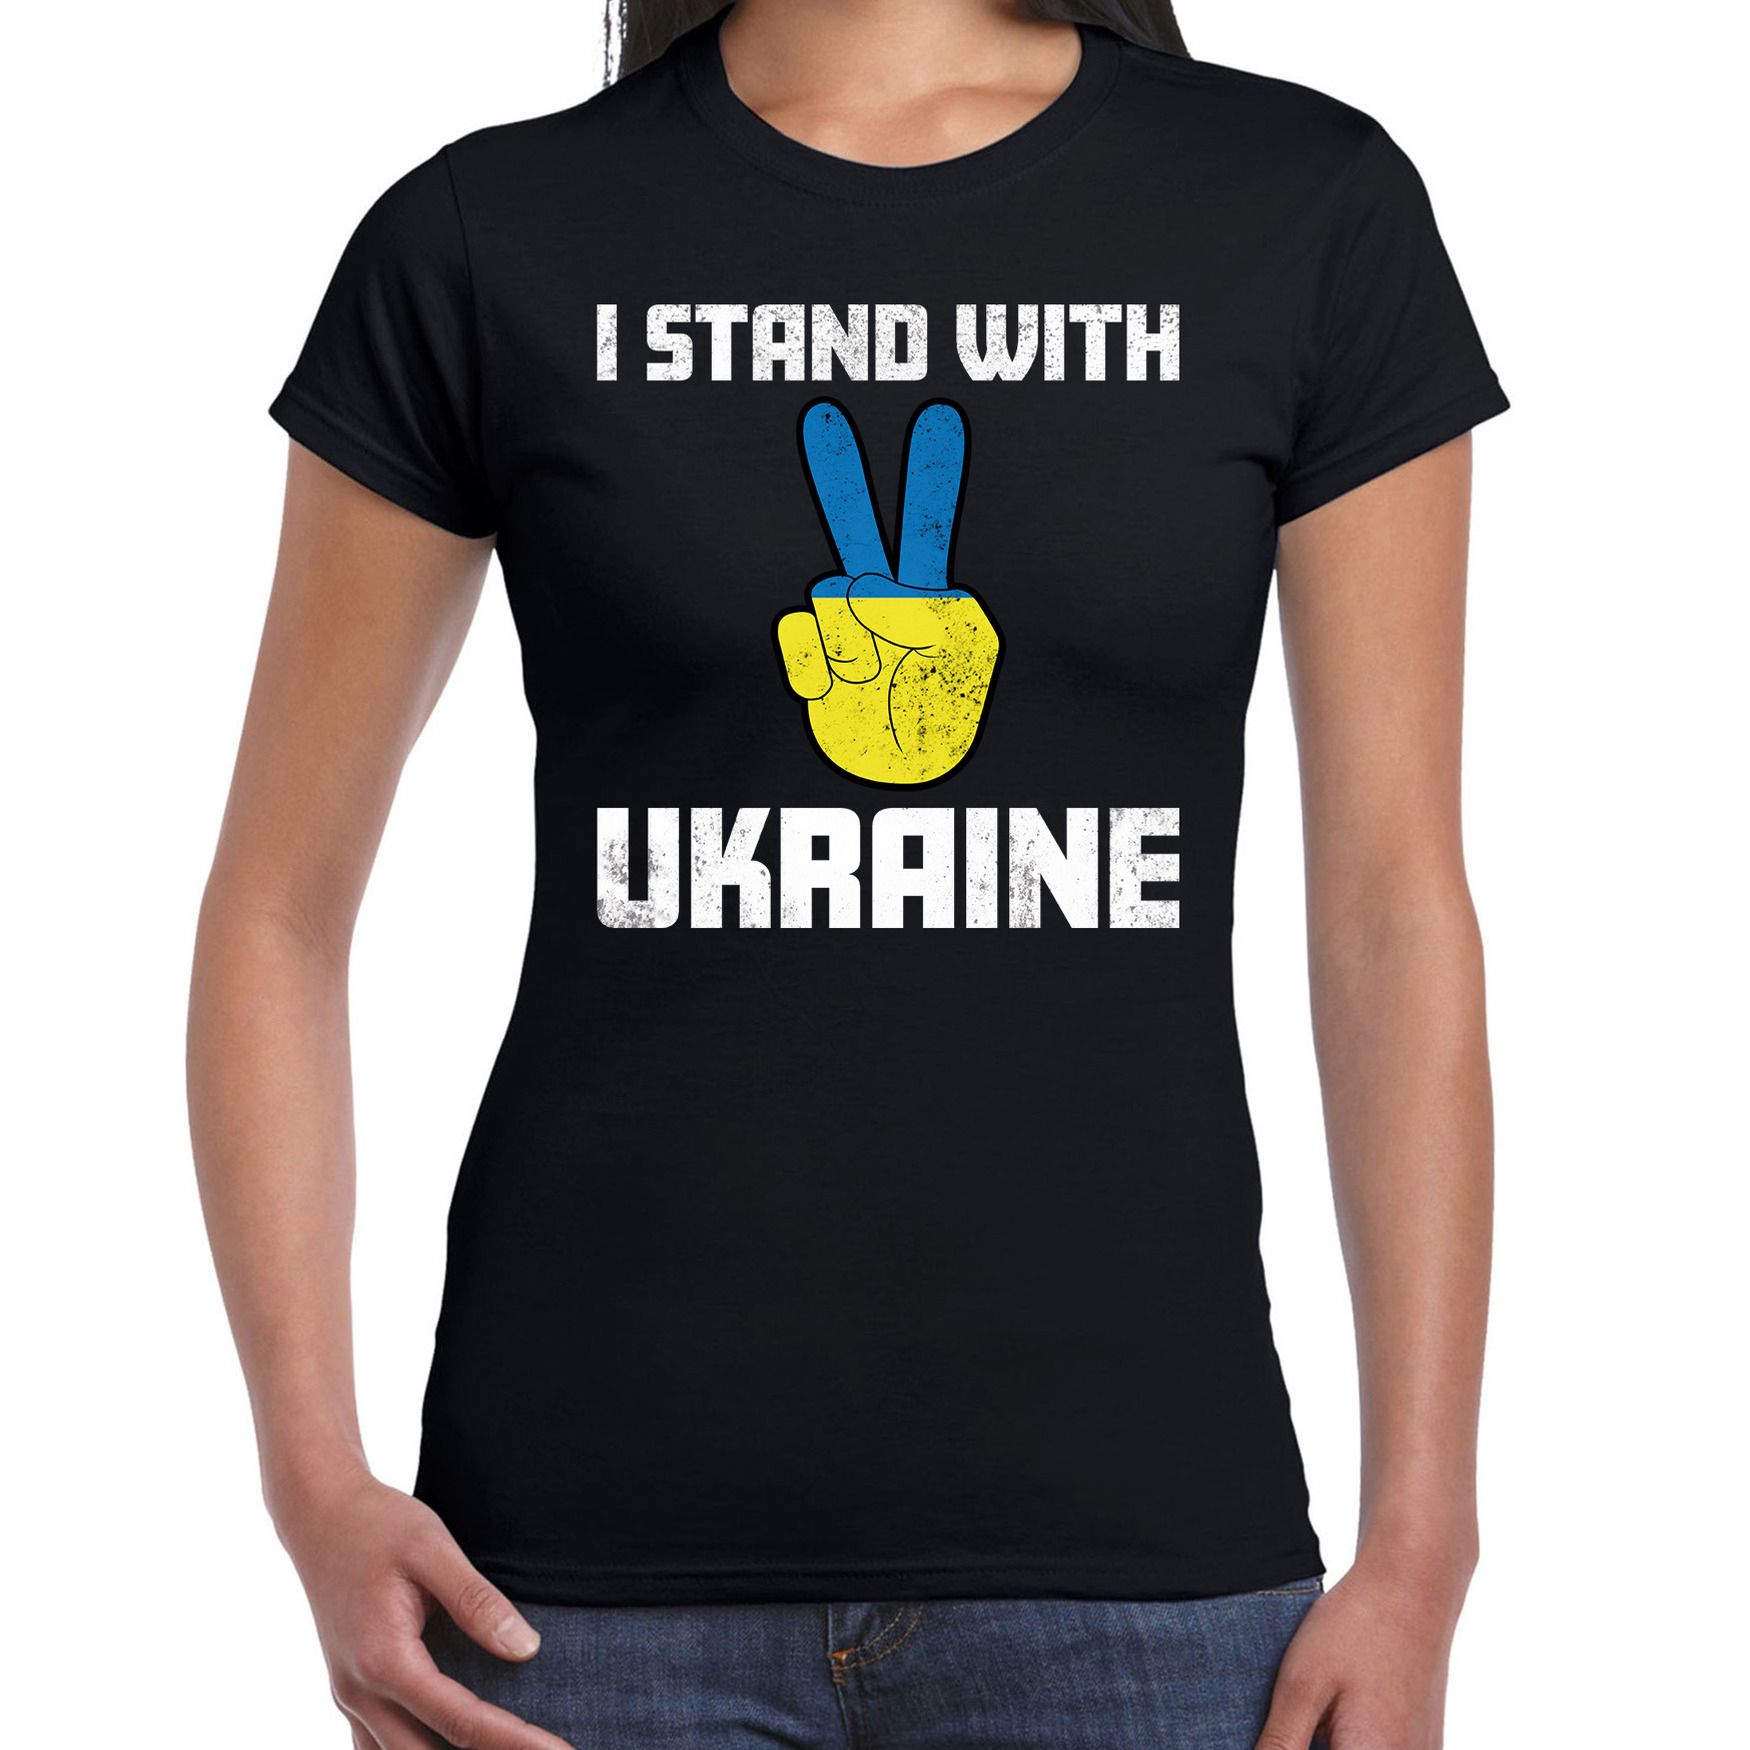 I stand with Ukraine t-shirt zwart dames Oekraine shirt met Oekraiense vlag in vingers